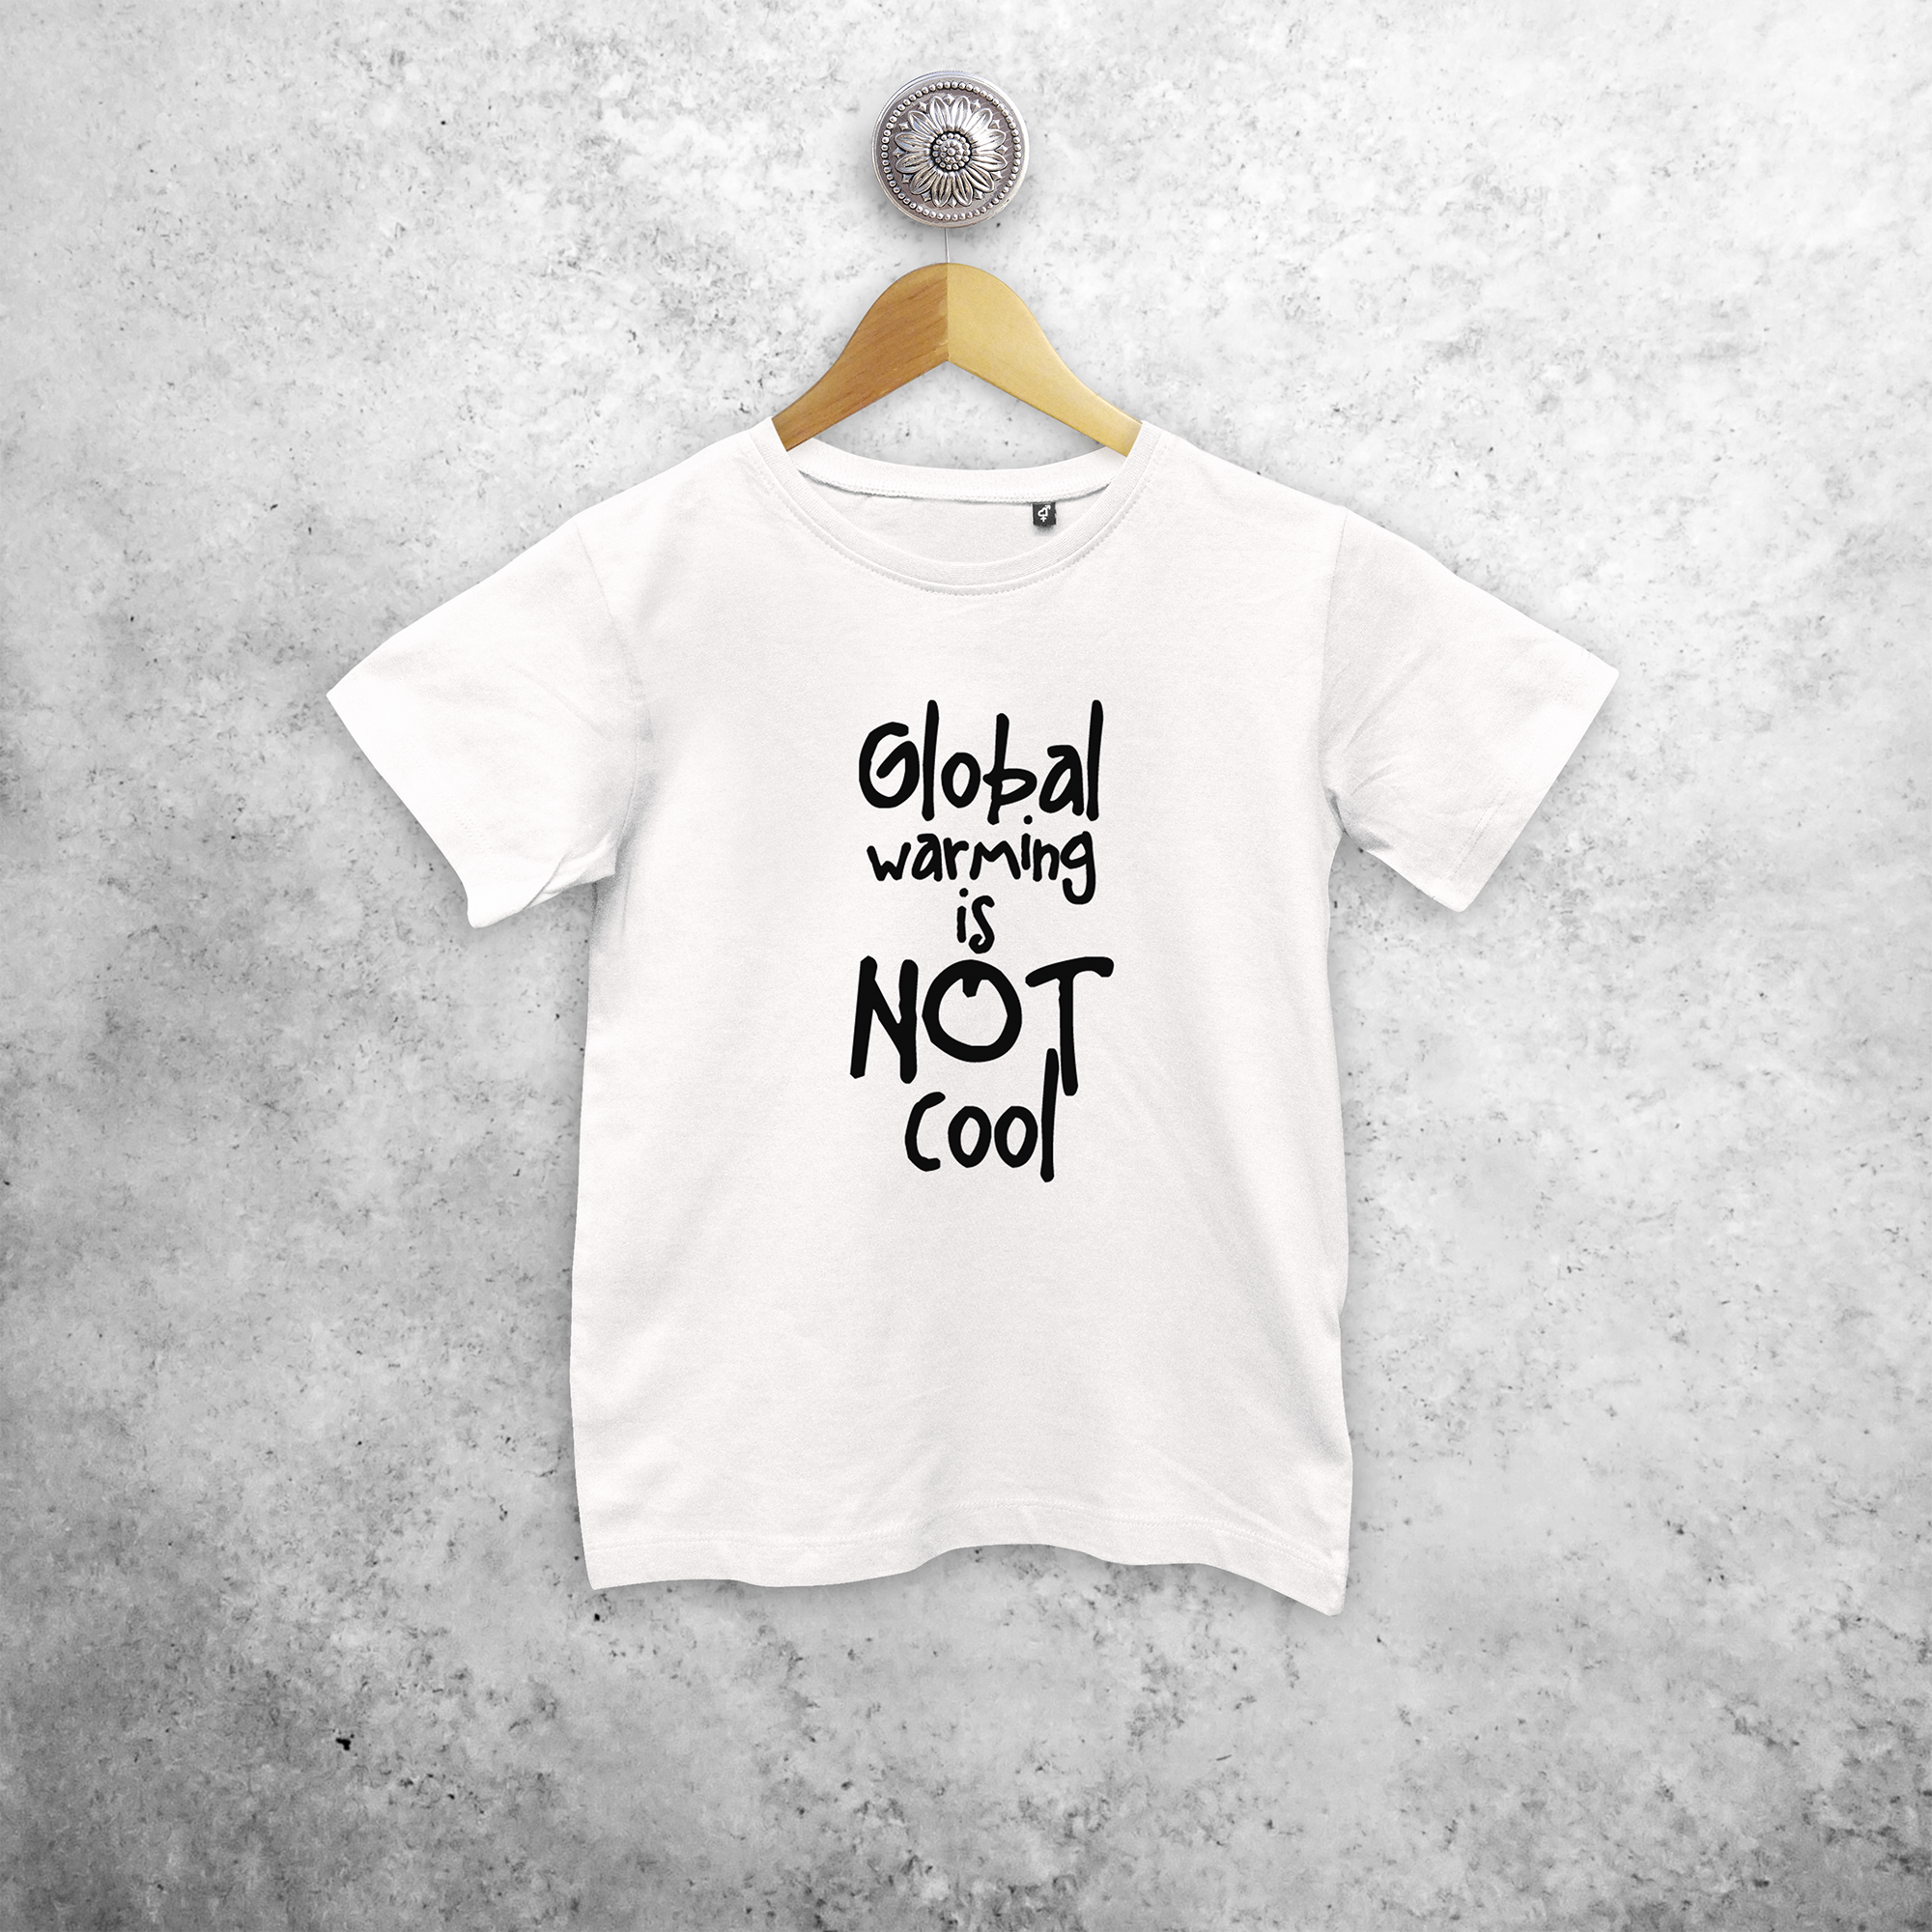 'Global warming is not cool' kids shortsleeve shirt